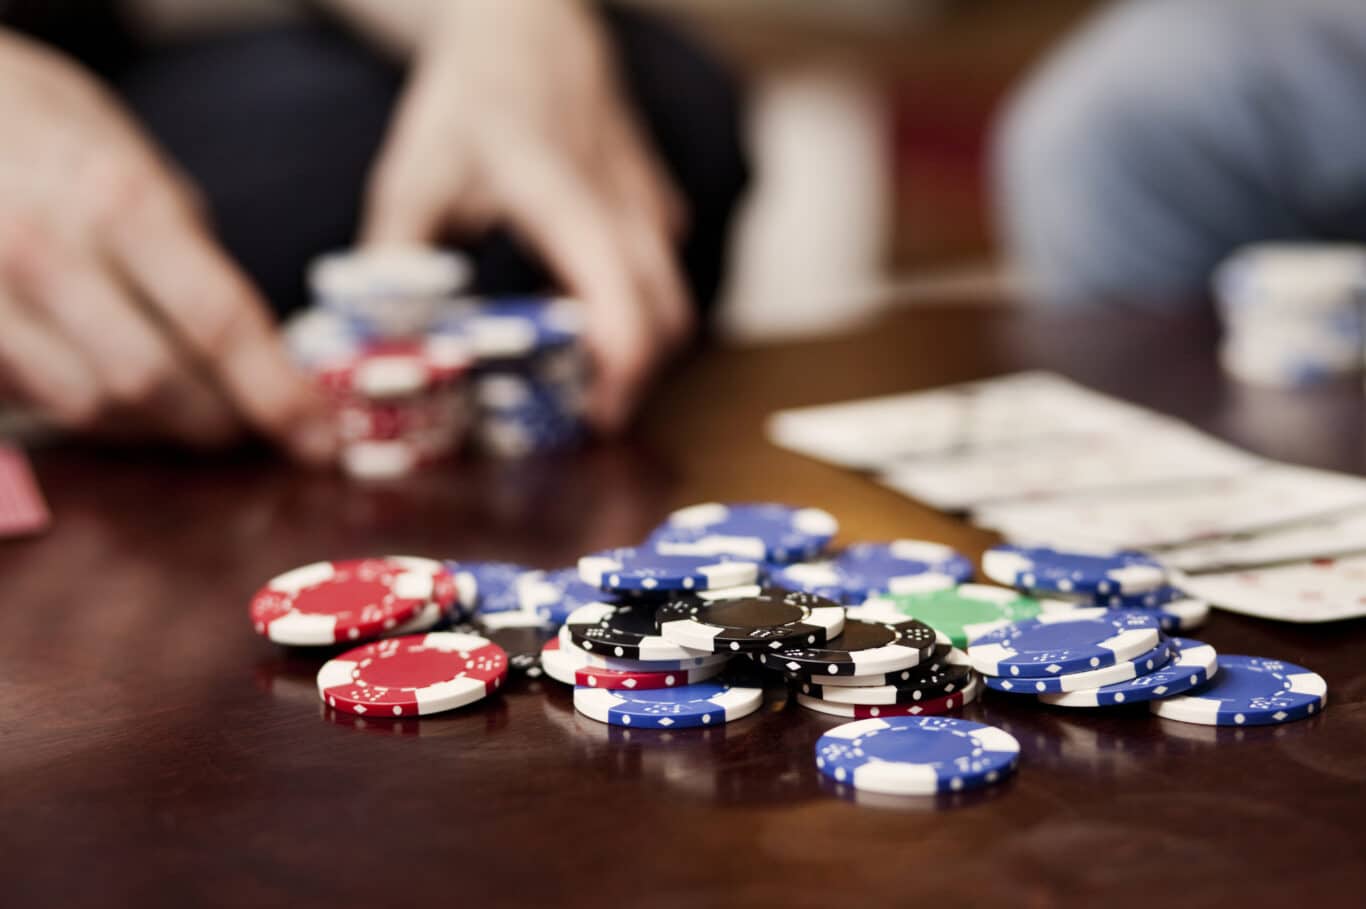 gambling chips on table at casino 2021 08 28 23 54 56 utc